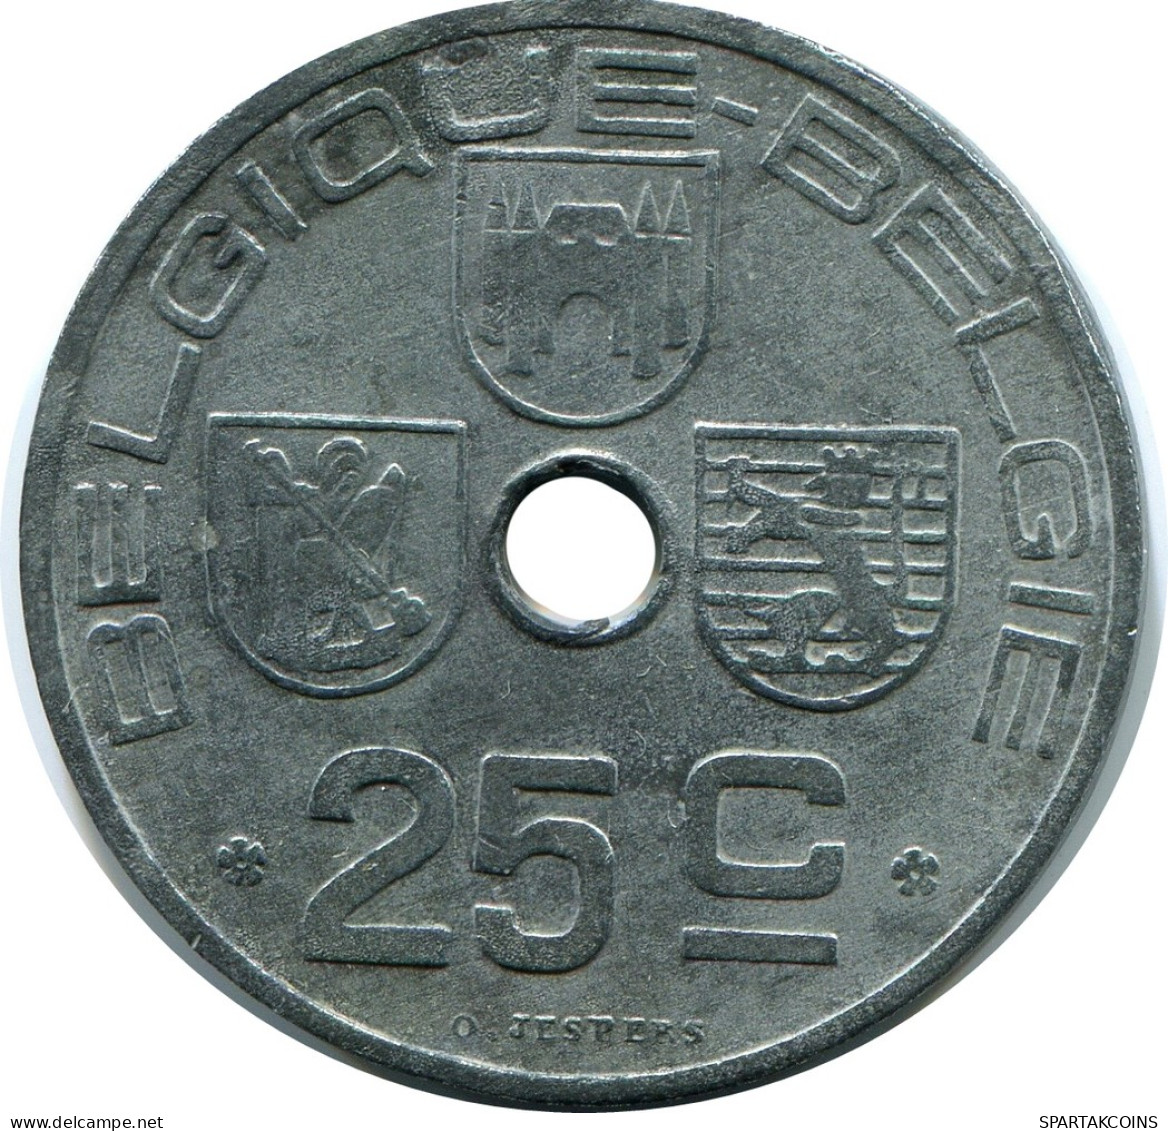 25 CENTIMES 1946 DUTCH Text BELGIUM Coin #BA419.U - 10 Cents & 25 Cents